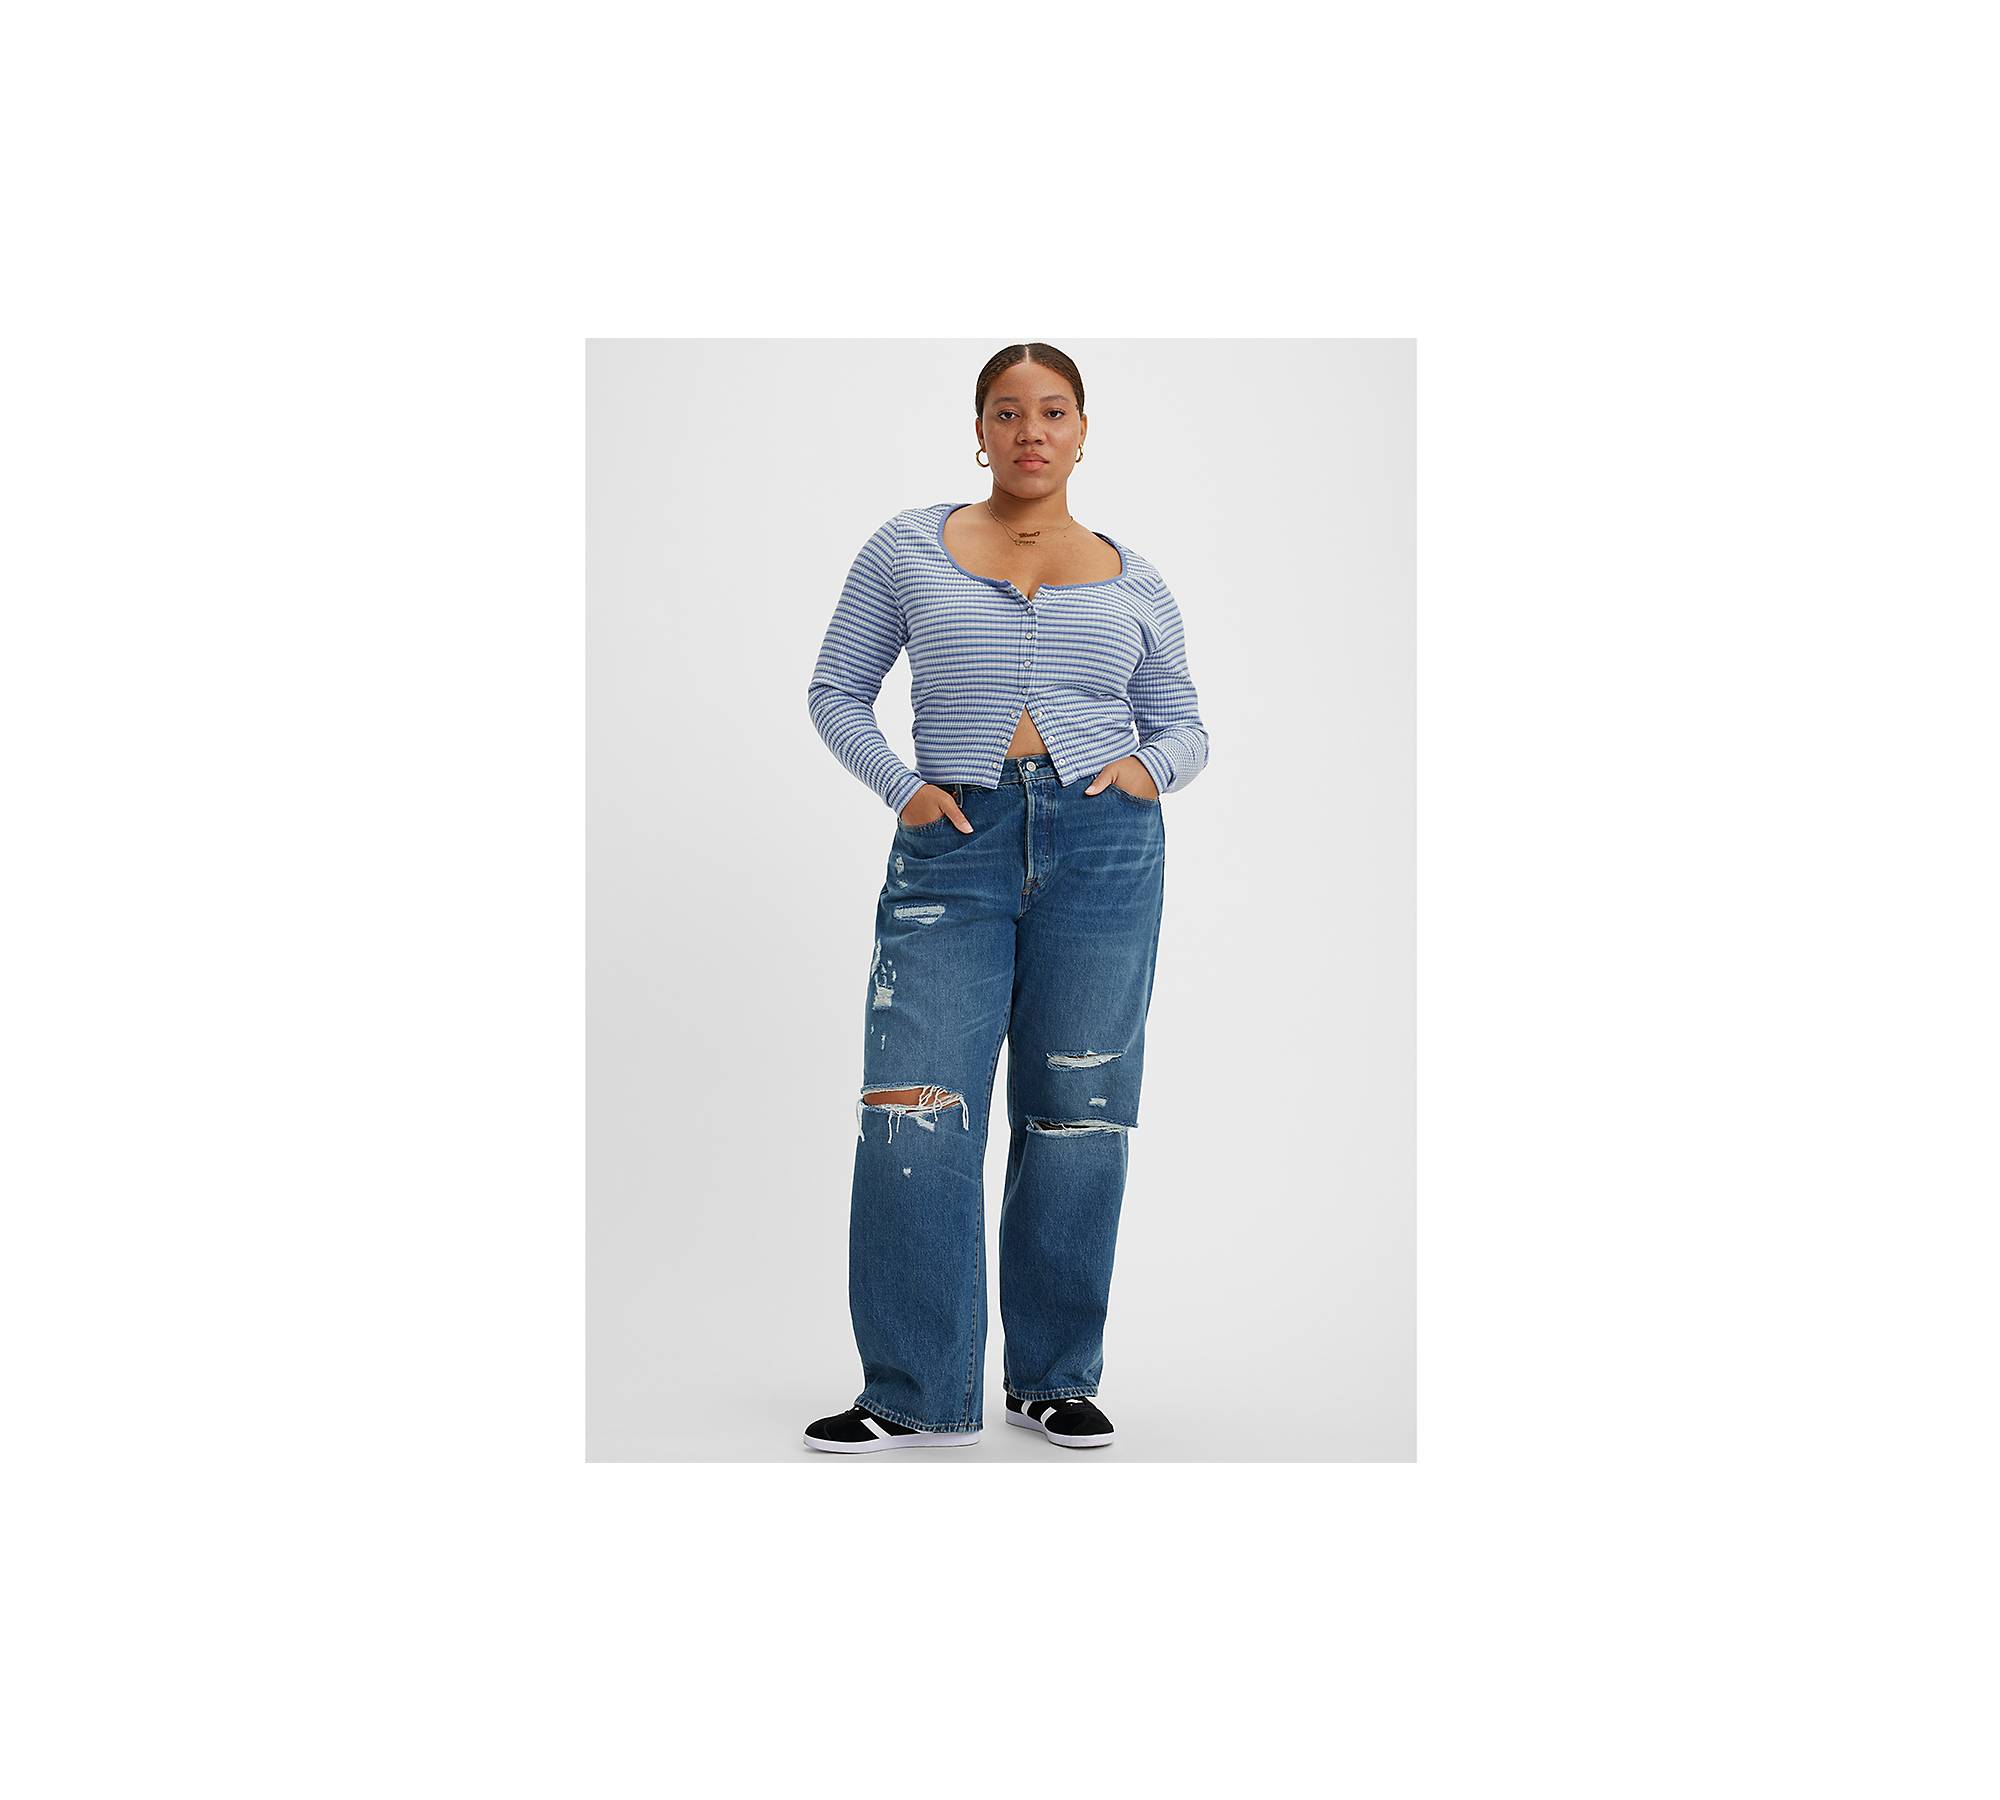 Vintage Gap Women's Boy Fit Jeans Button Fly Medium Wash Size 16 Long